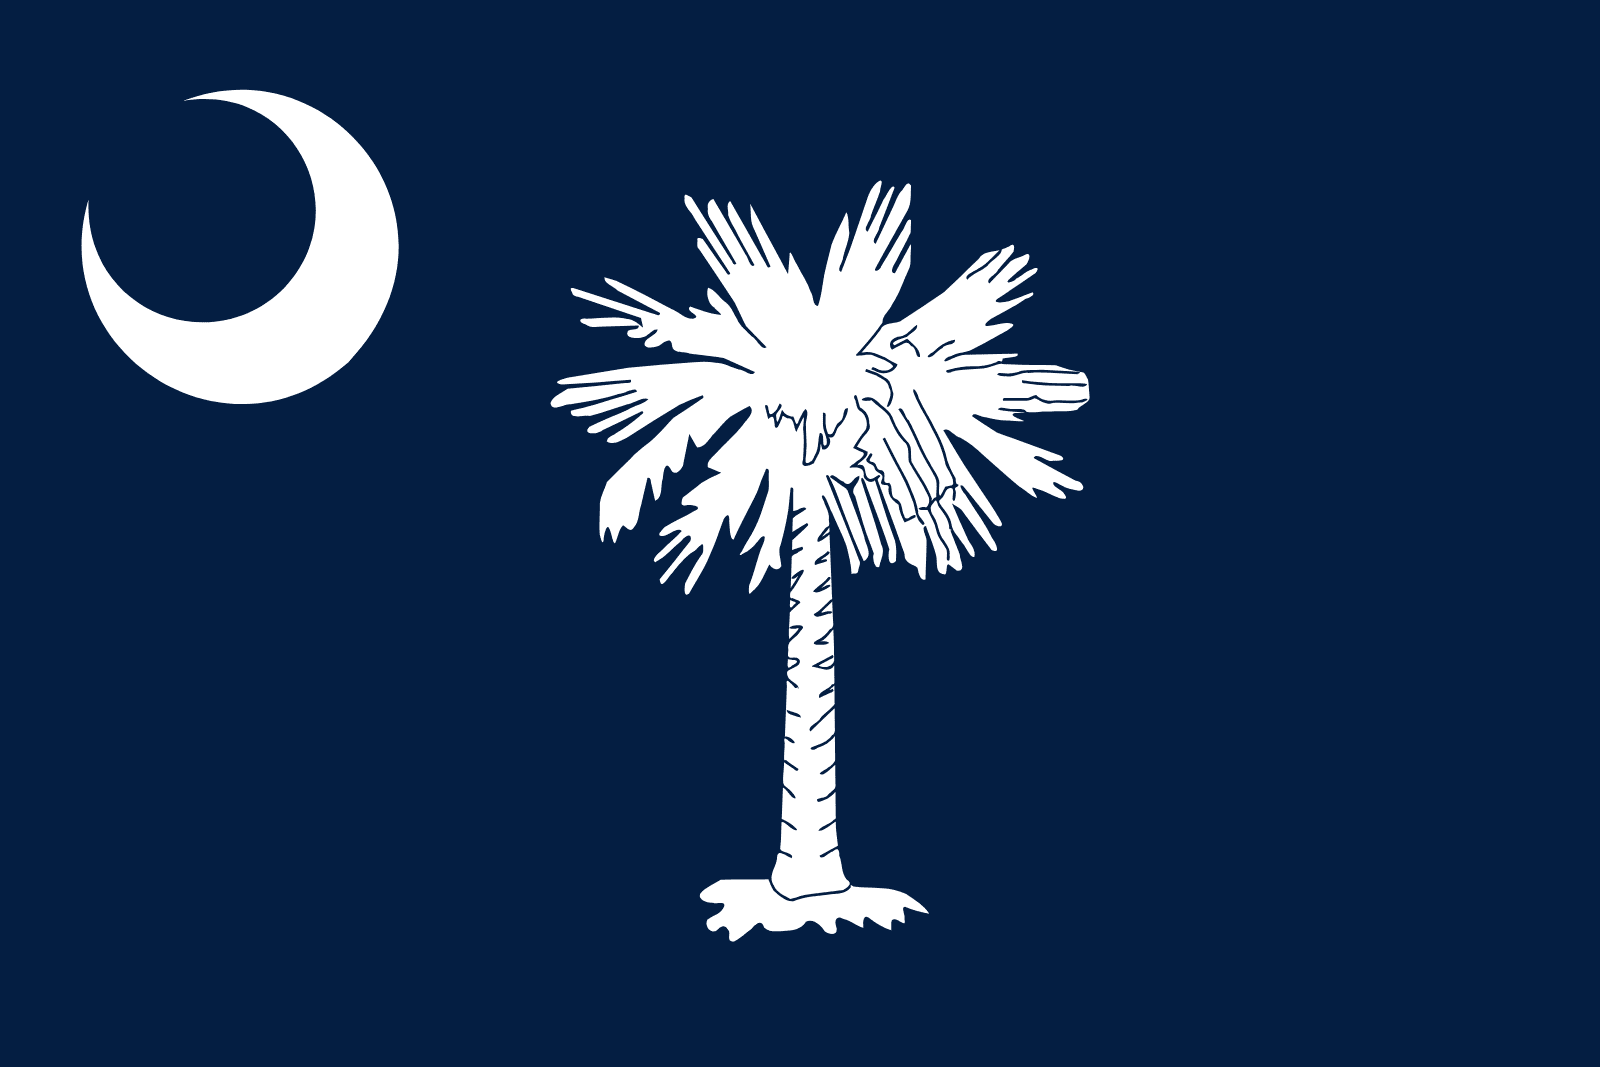 South Carolina | Flags of the U.S. states